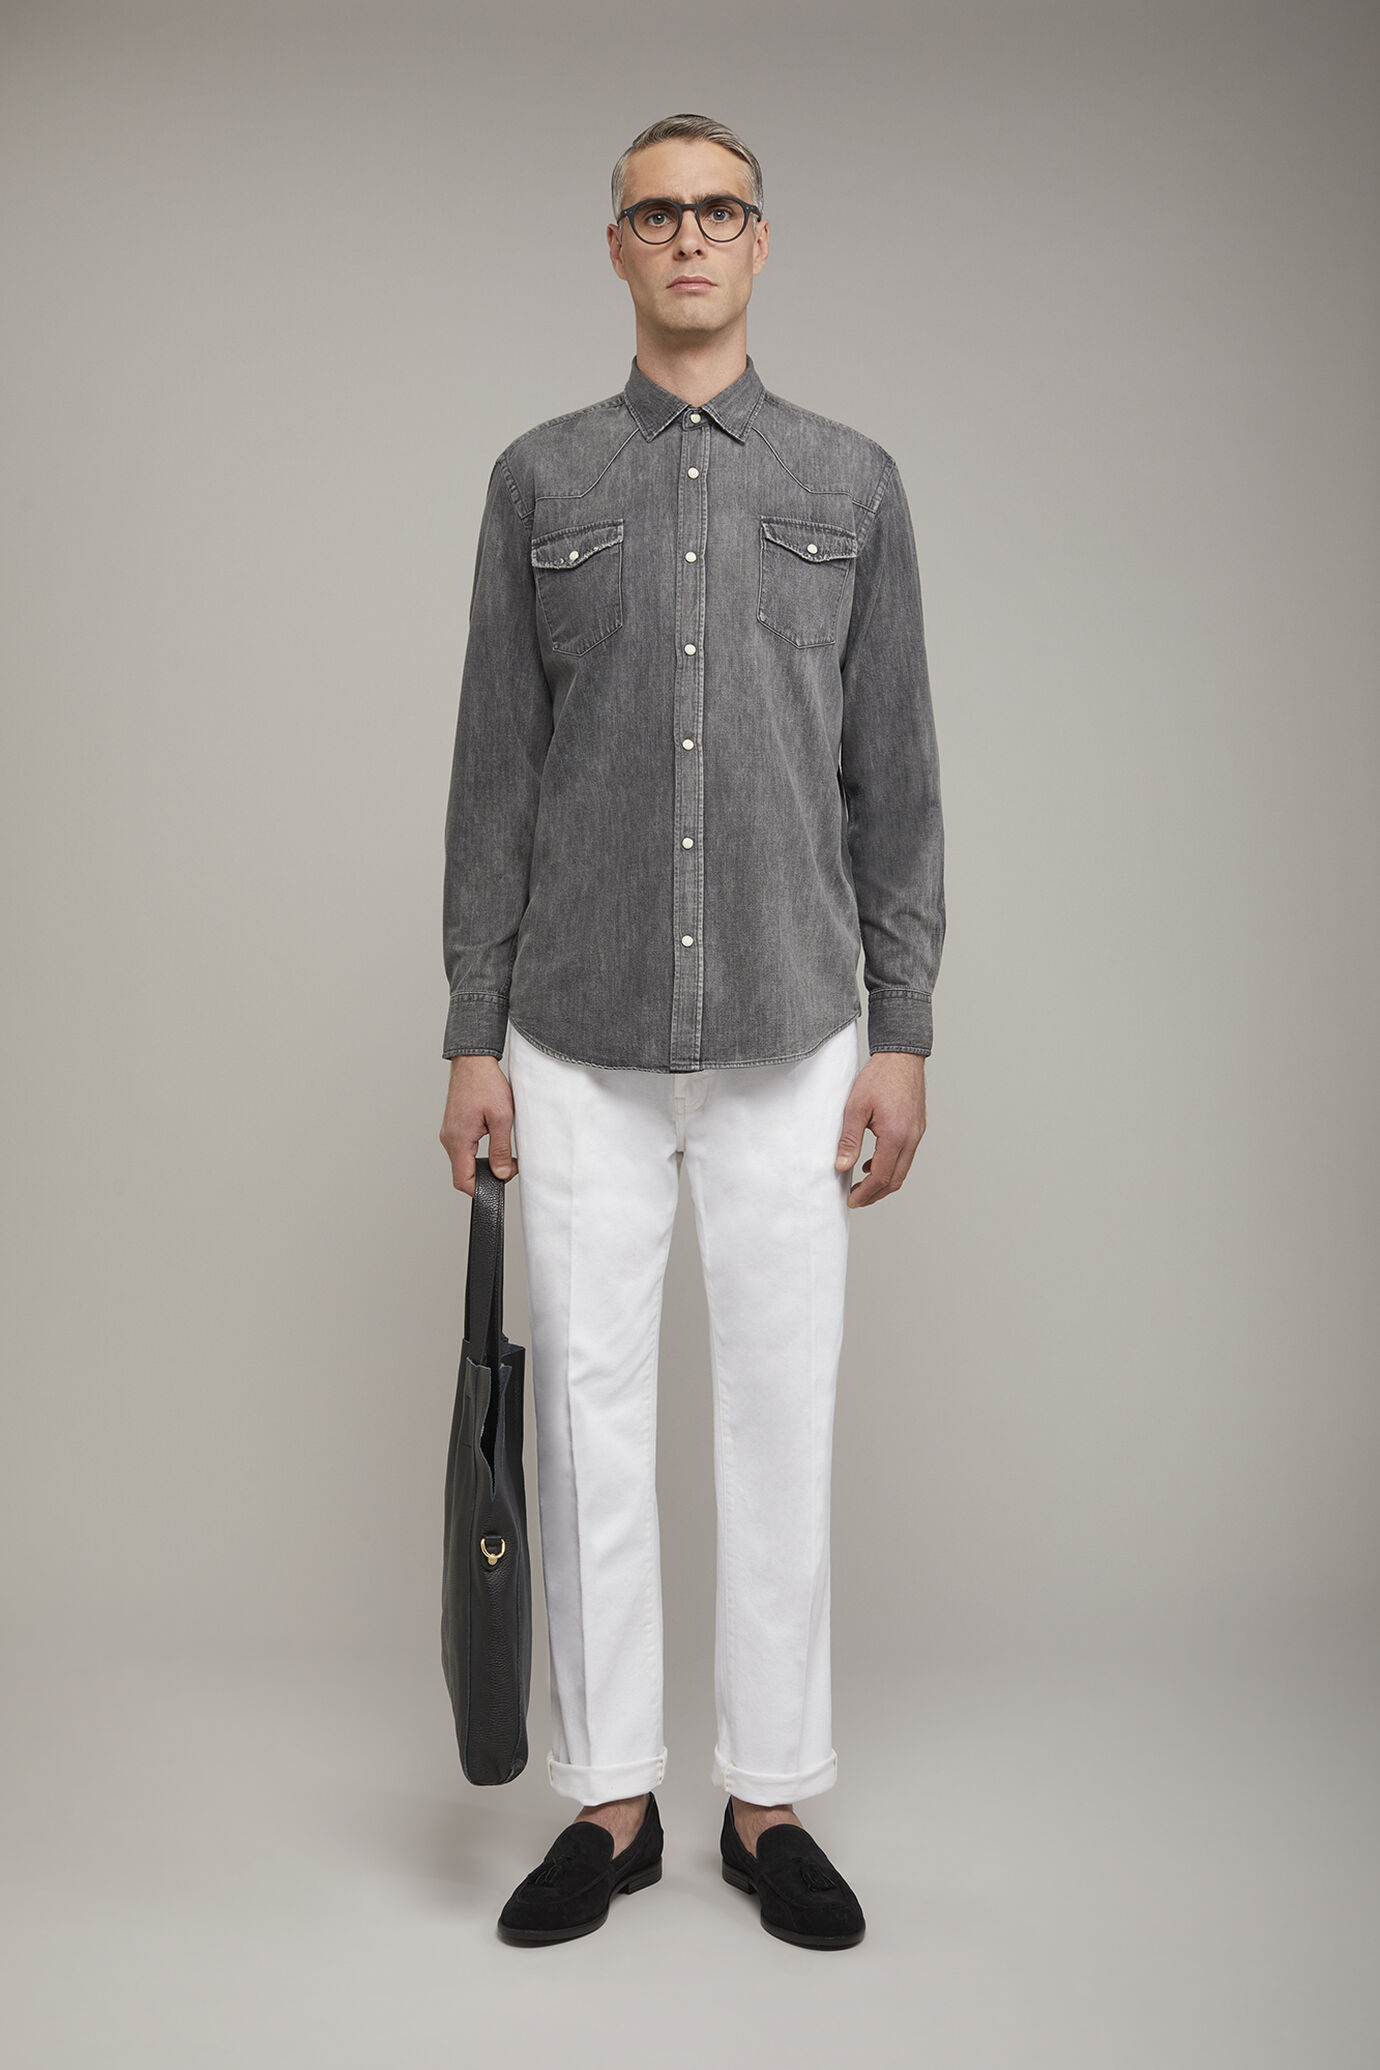 Men’s casual shirt classic collar 100% cotton denim fabric comfort fit